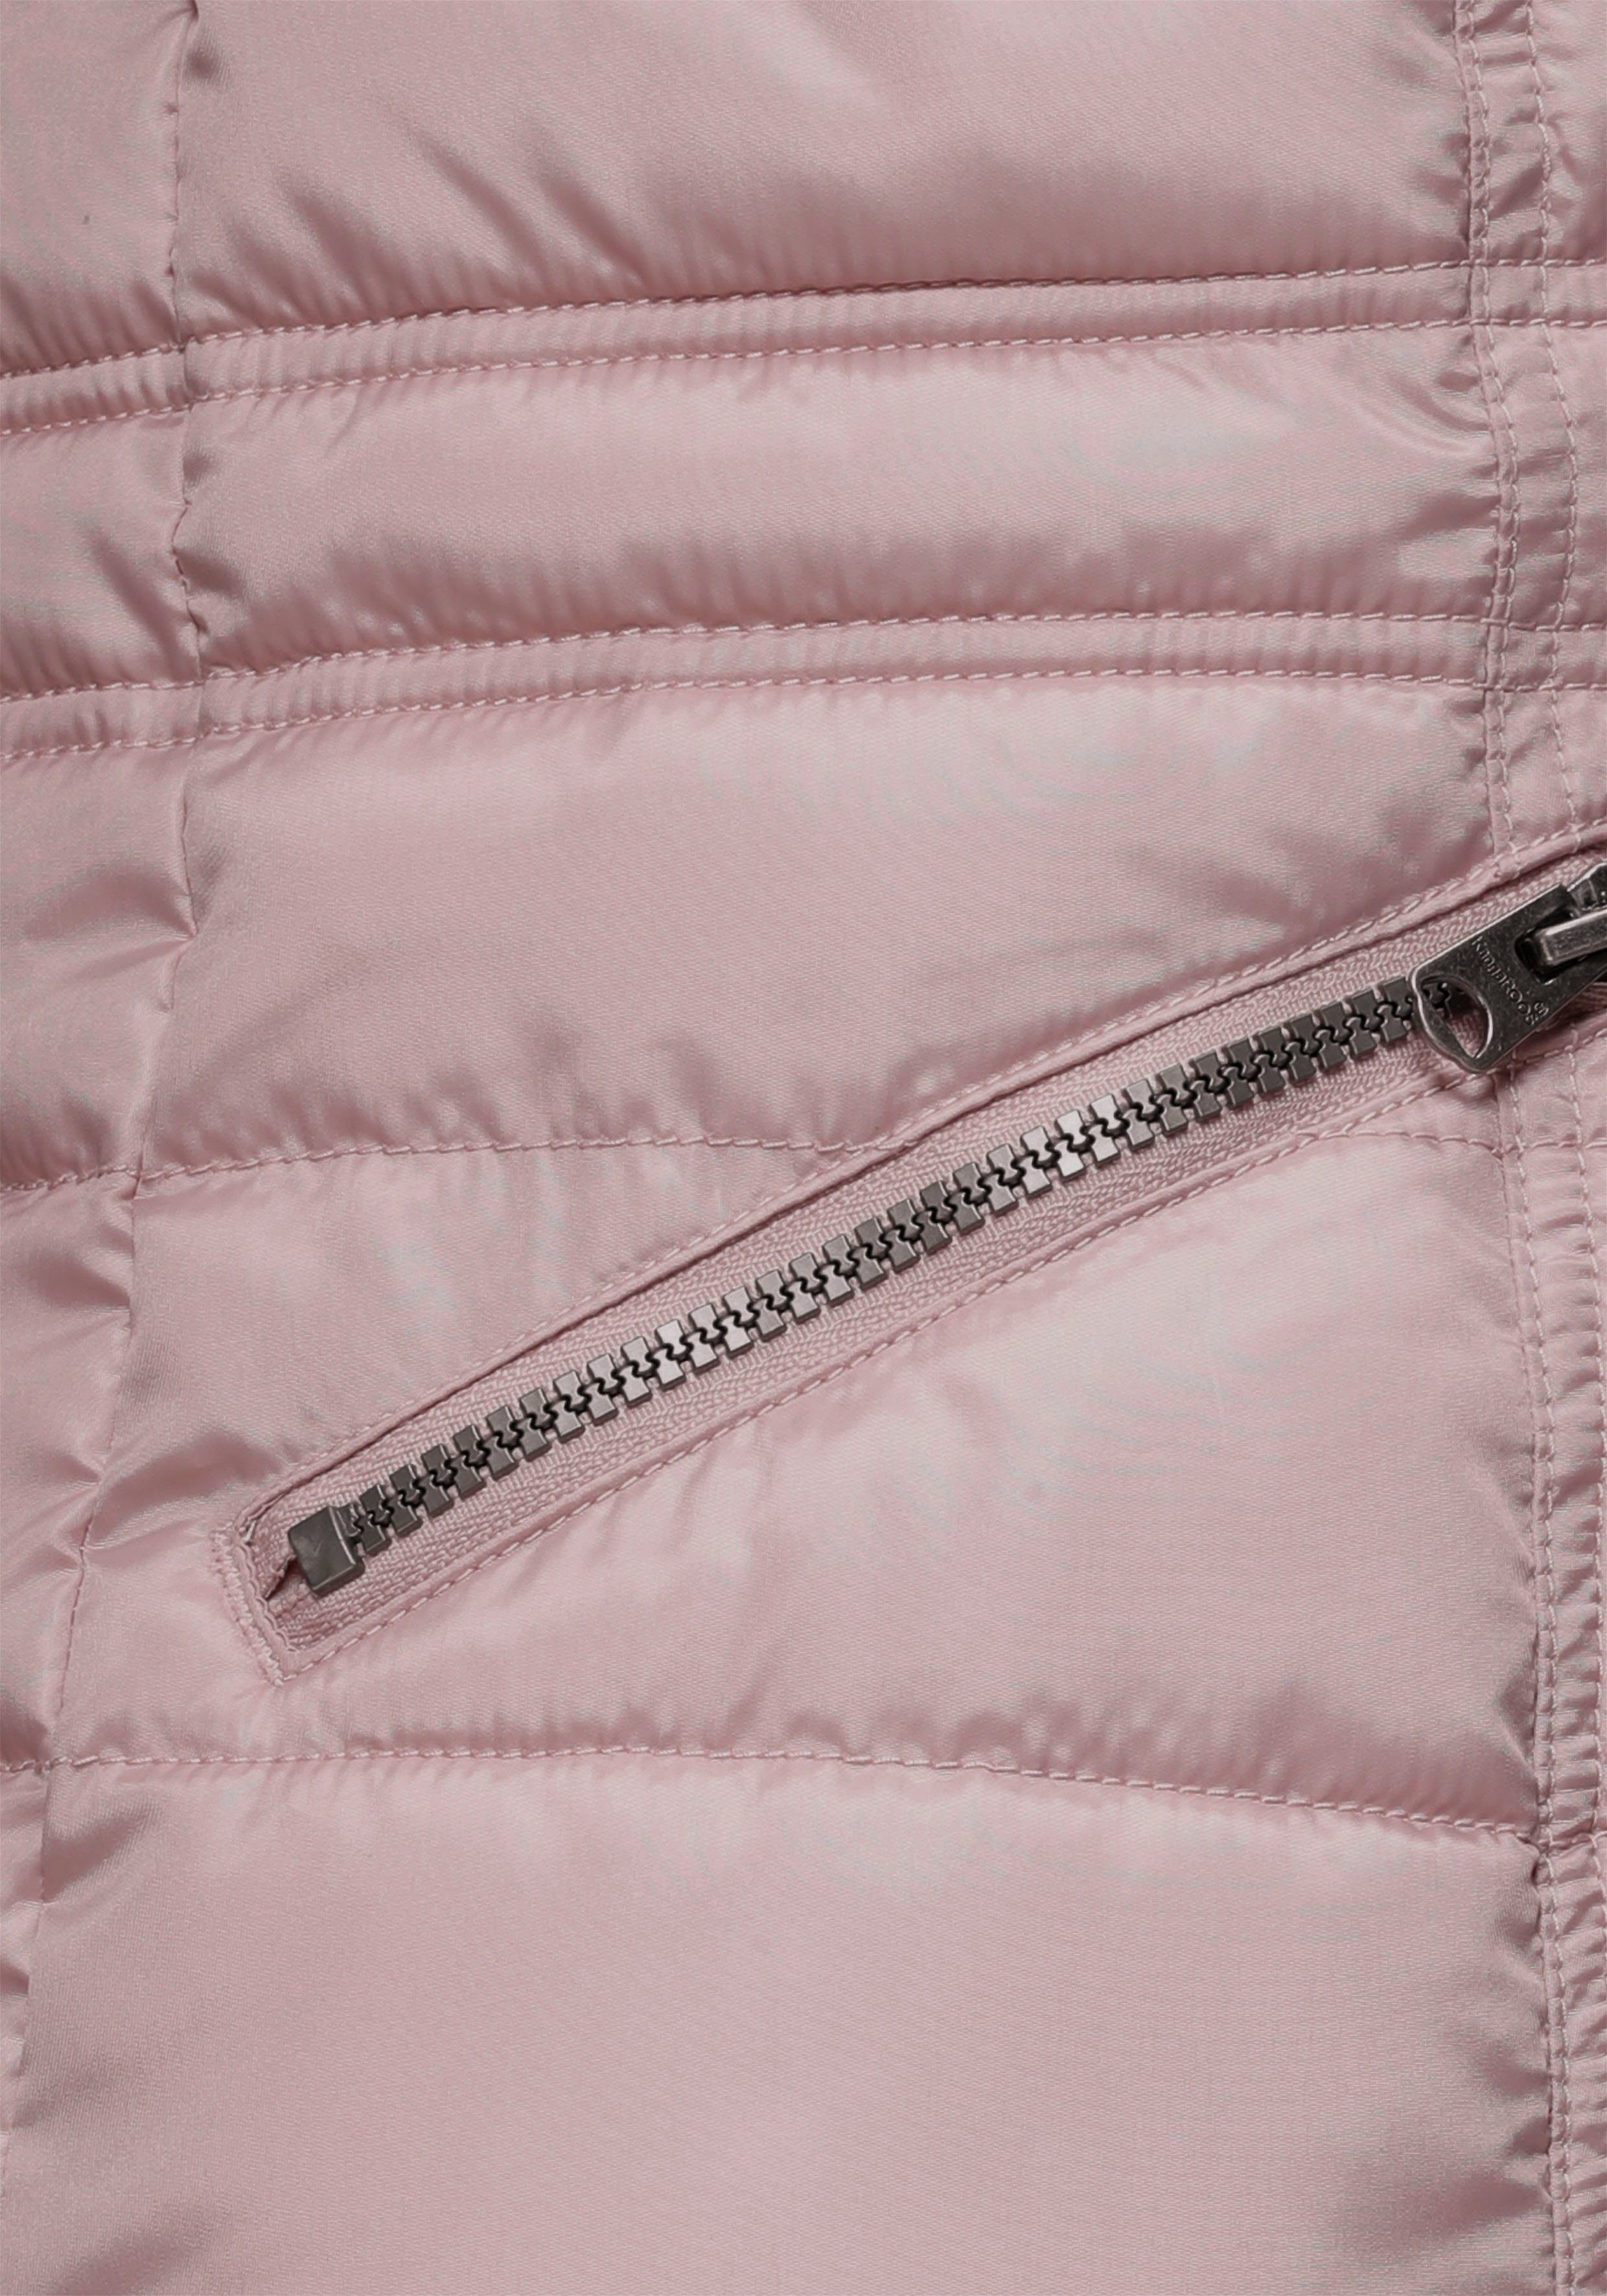 KangaROOS Steppjacke mit kuscheligem, abnehmbarem der Kapuze Material) an Fellimitat-Kragen aus rosa (Jacke nachhaltigem